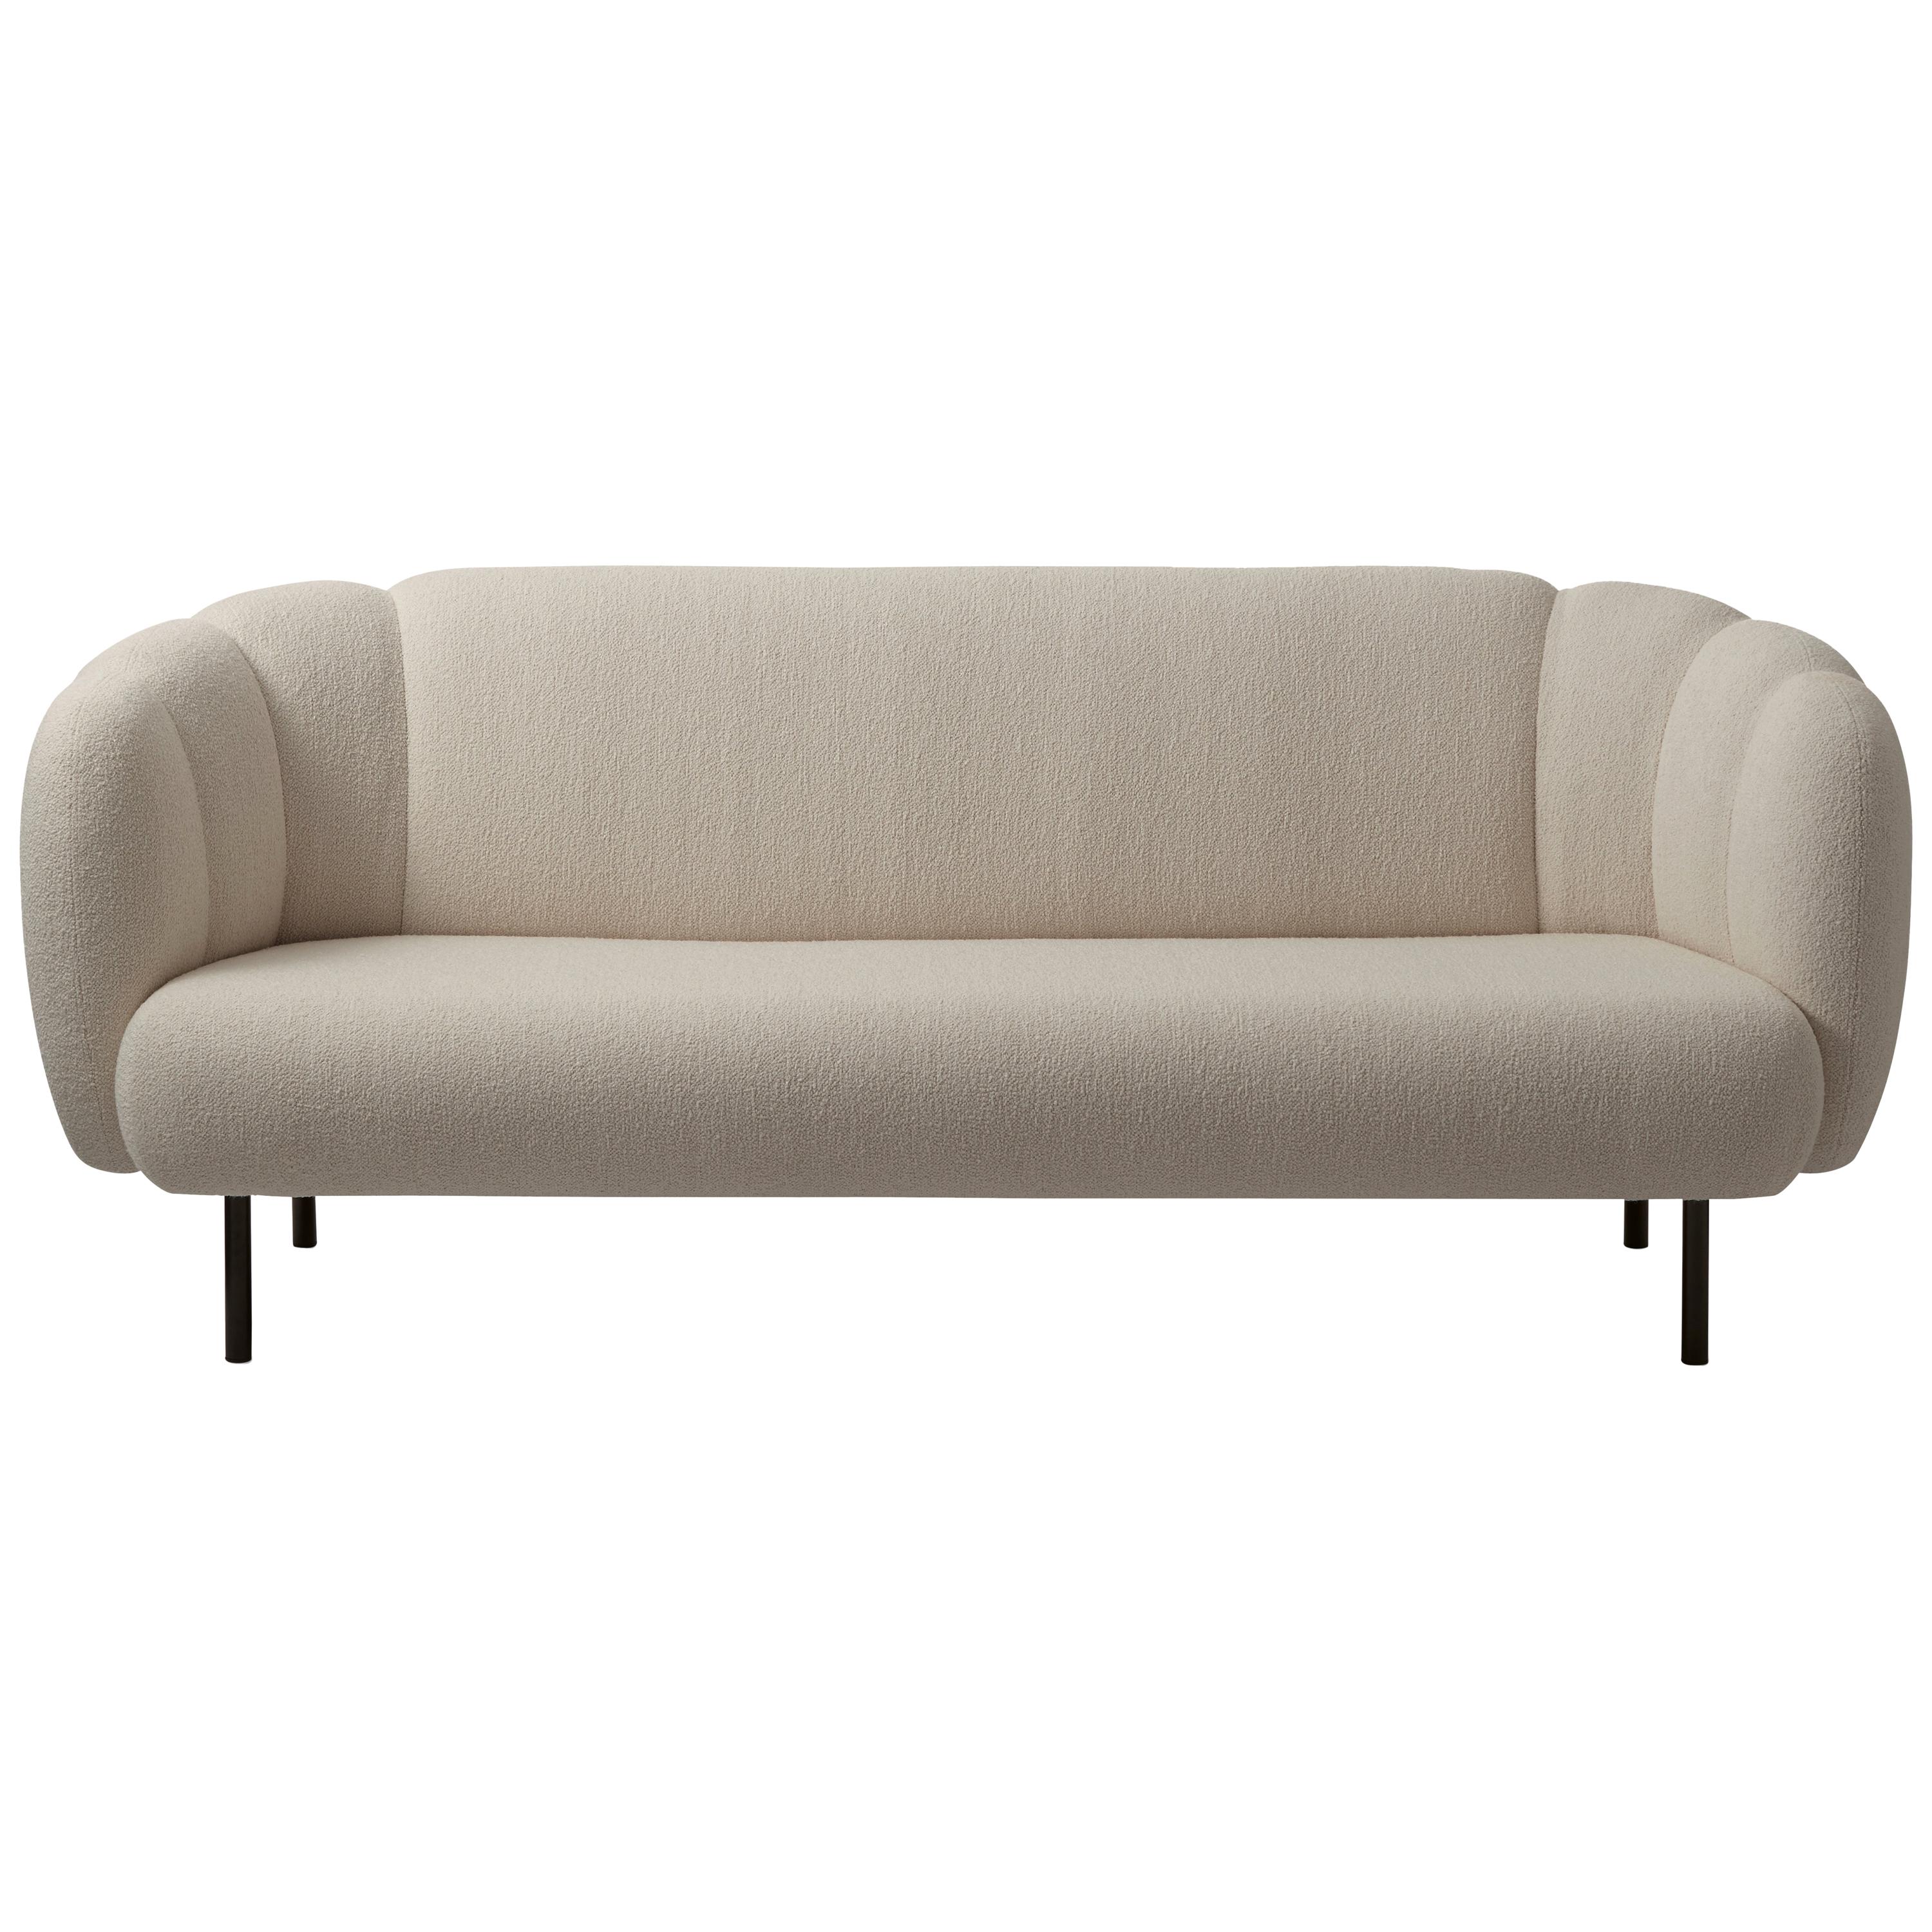 Cape 3-Seat Stitch Sofa, by Charlotte Høncke from Warm Nordic